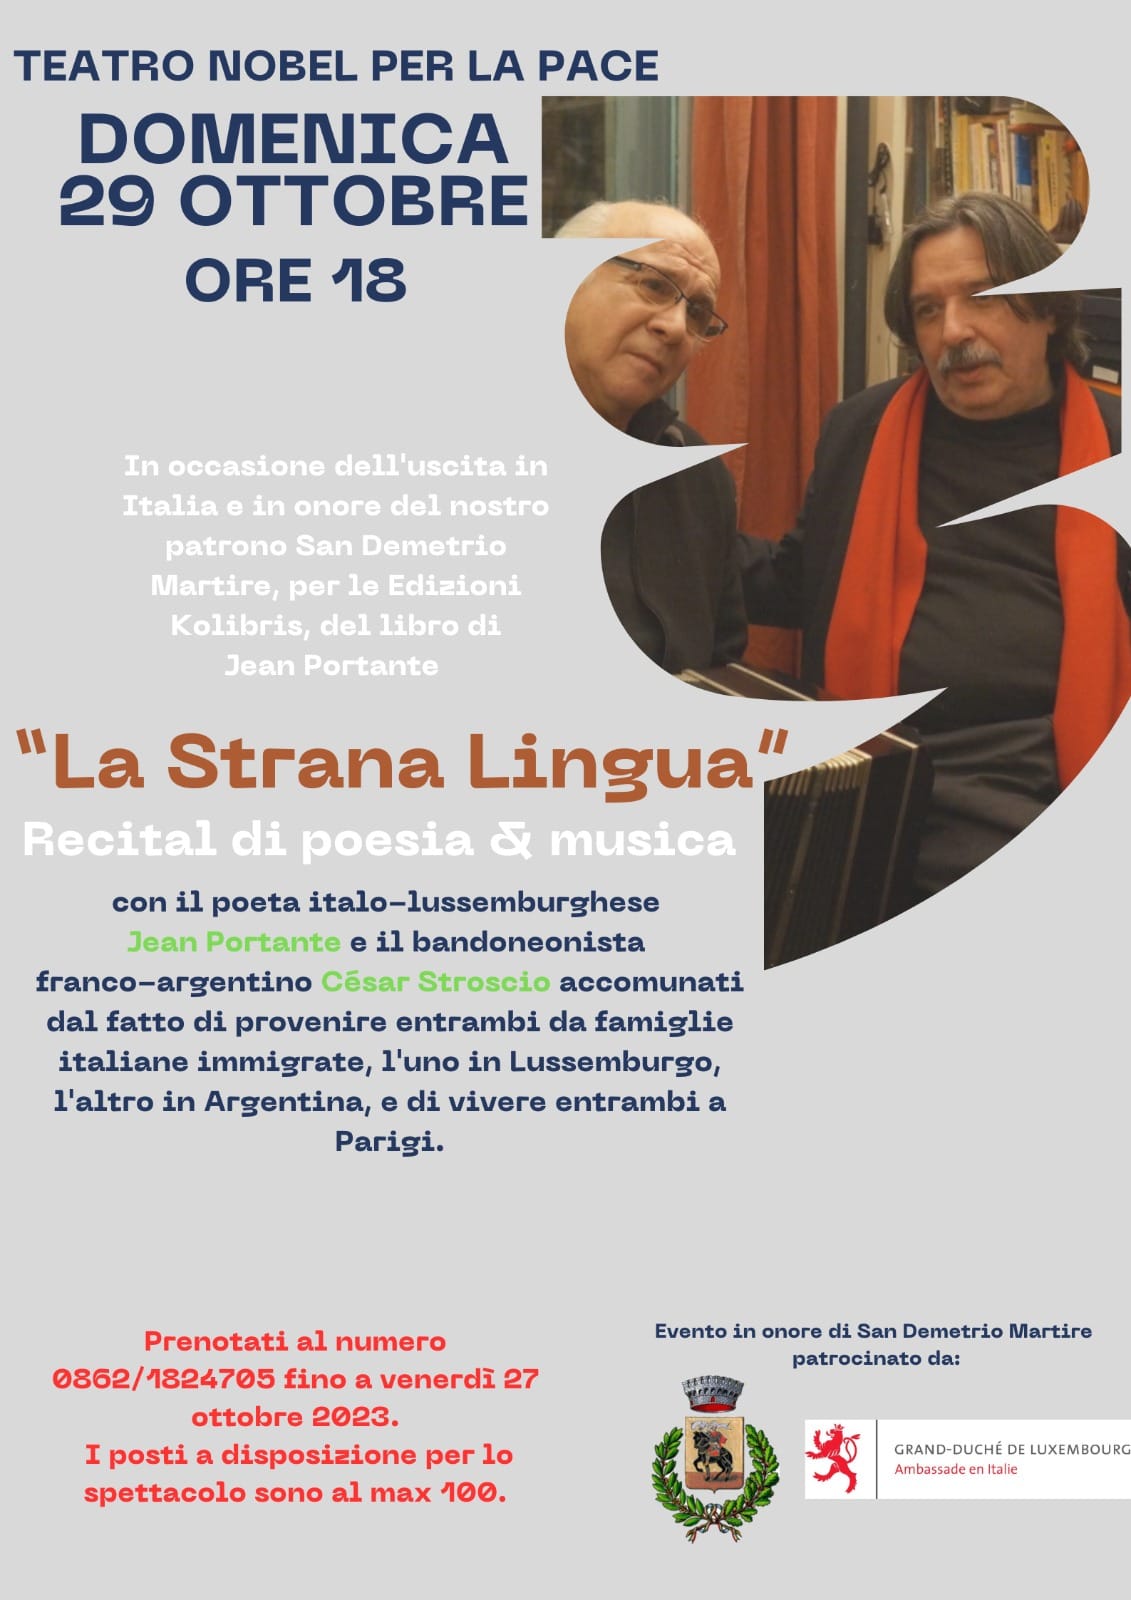 Jean Portante - "La strana lingua" poetry and music recital